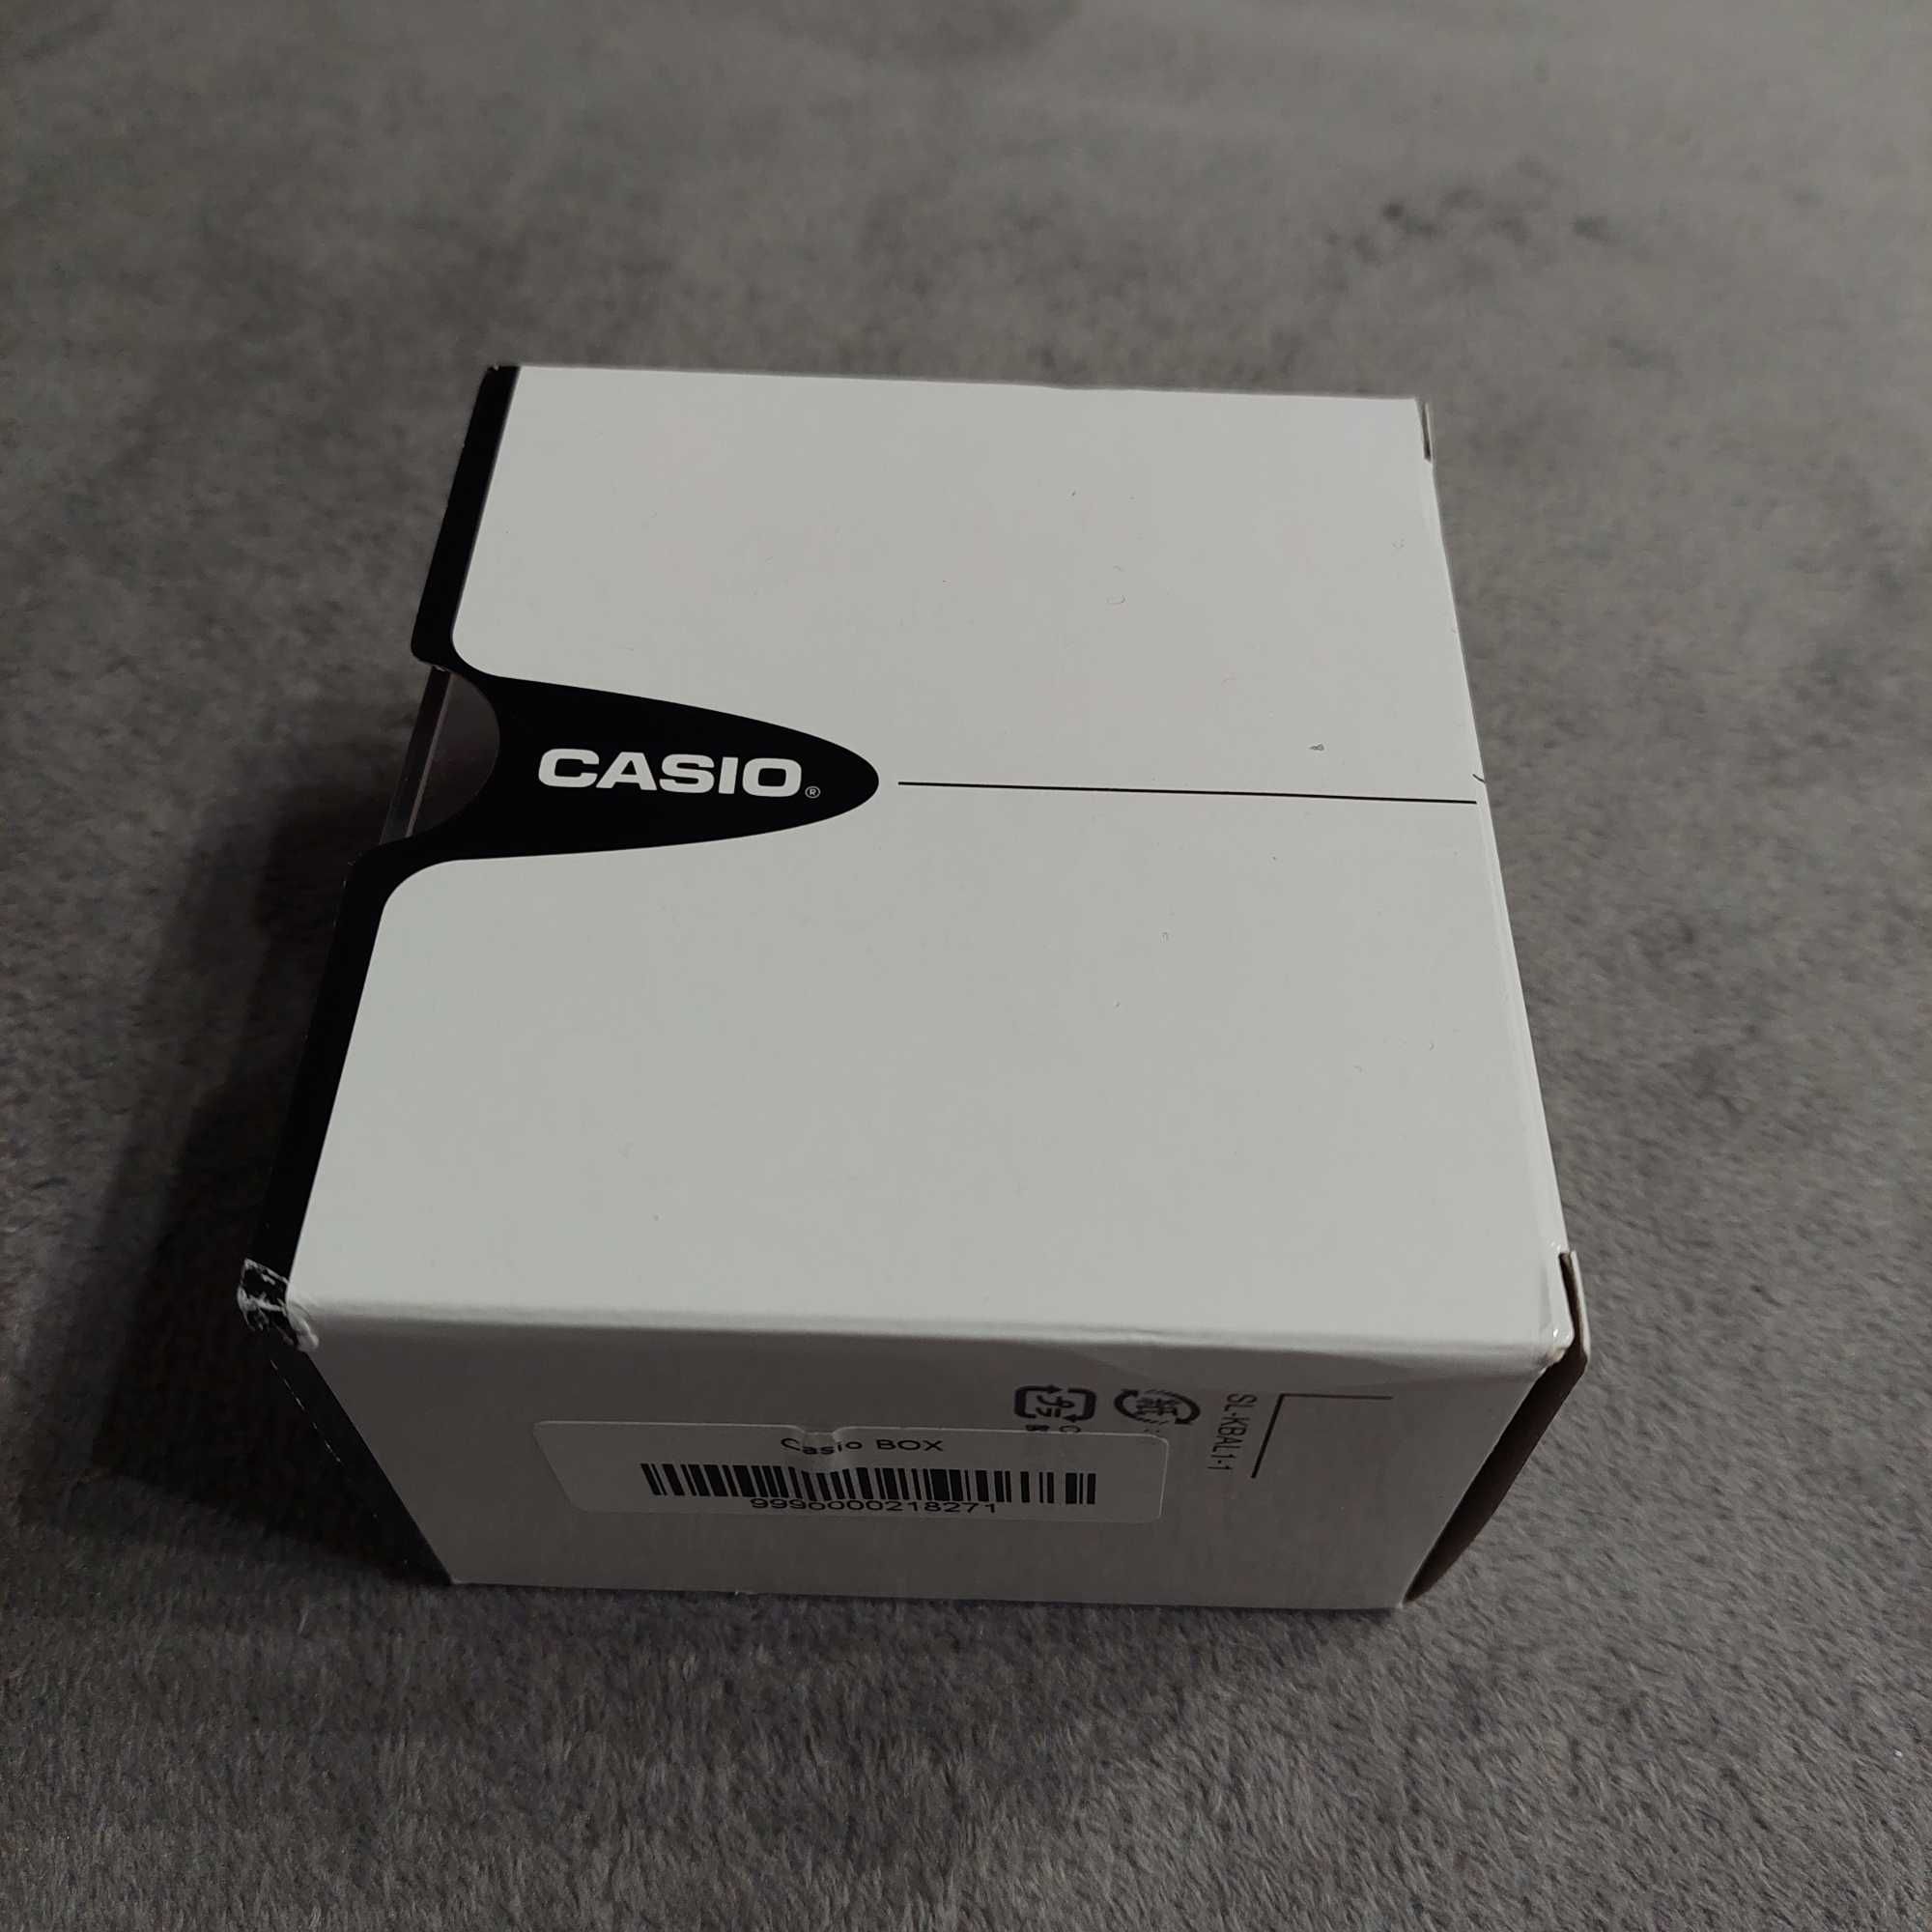 # zegarek Casio MTP-V006, nowe szkiełko i bateria, box - OKAZJA #